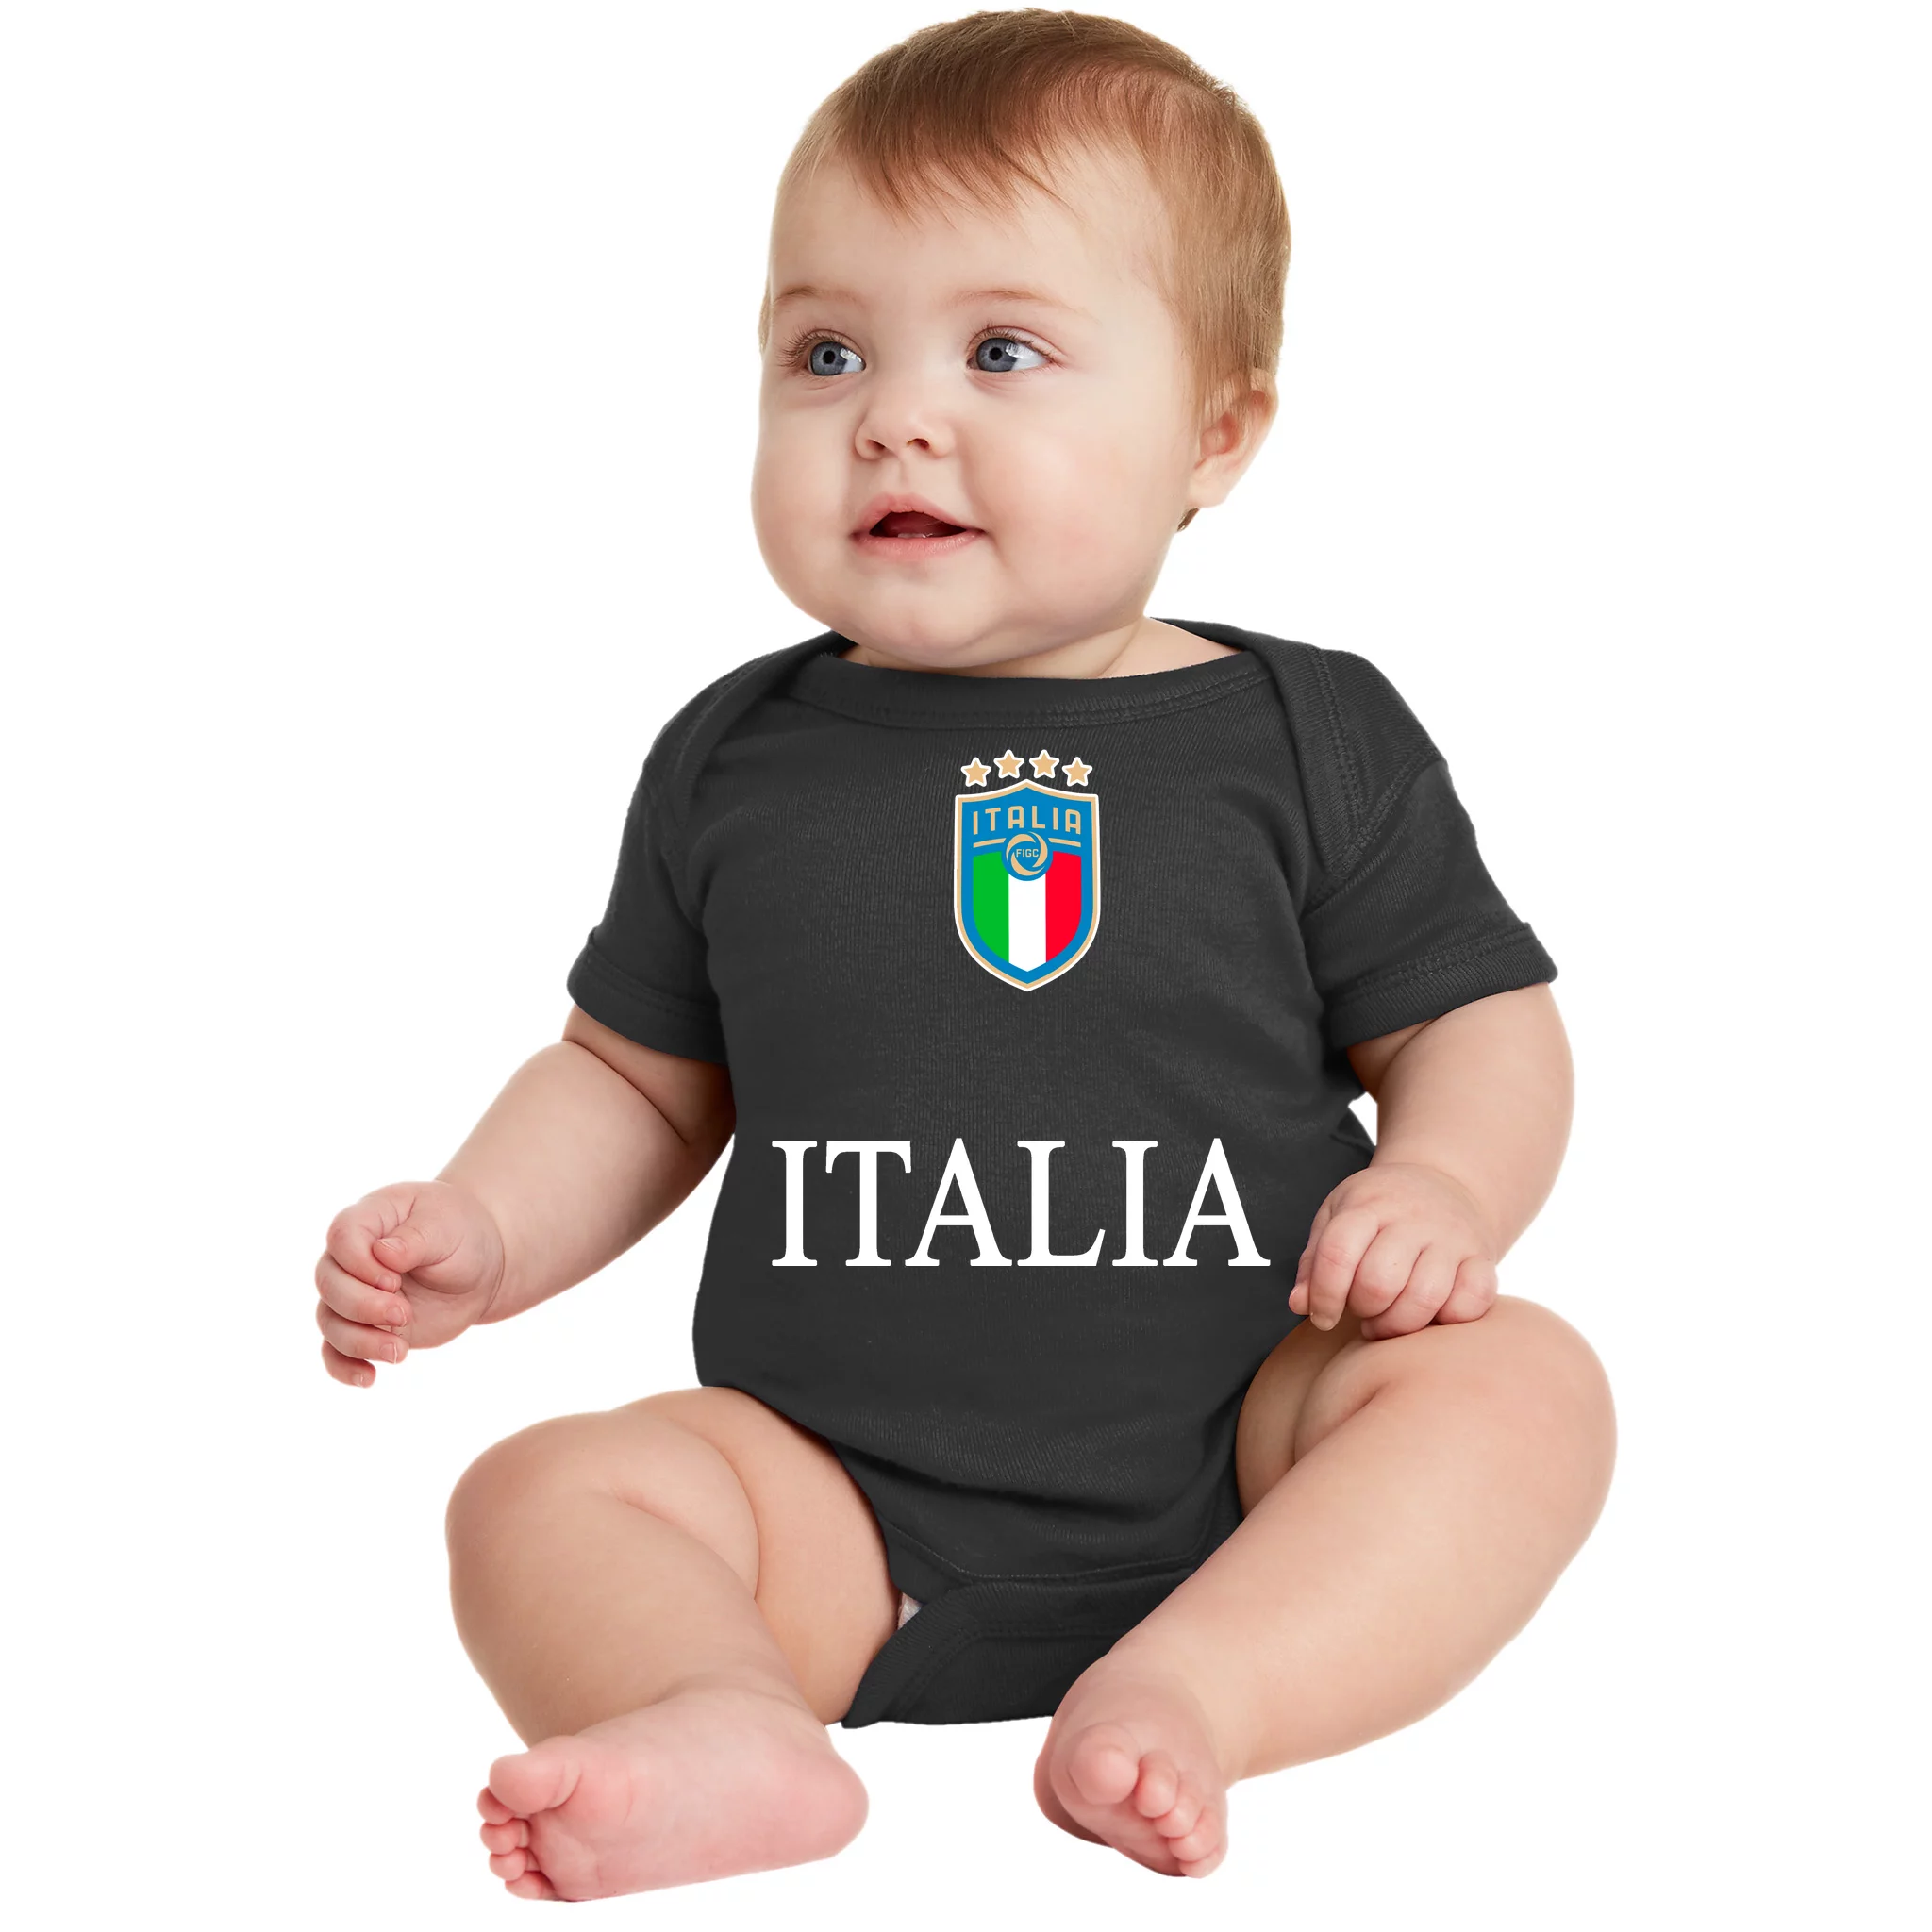 italian soccer jersey for infants